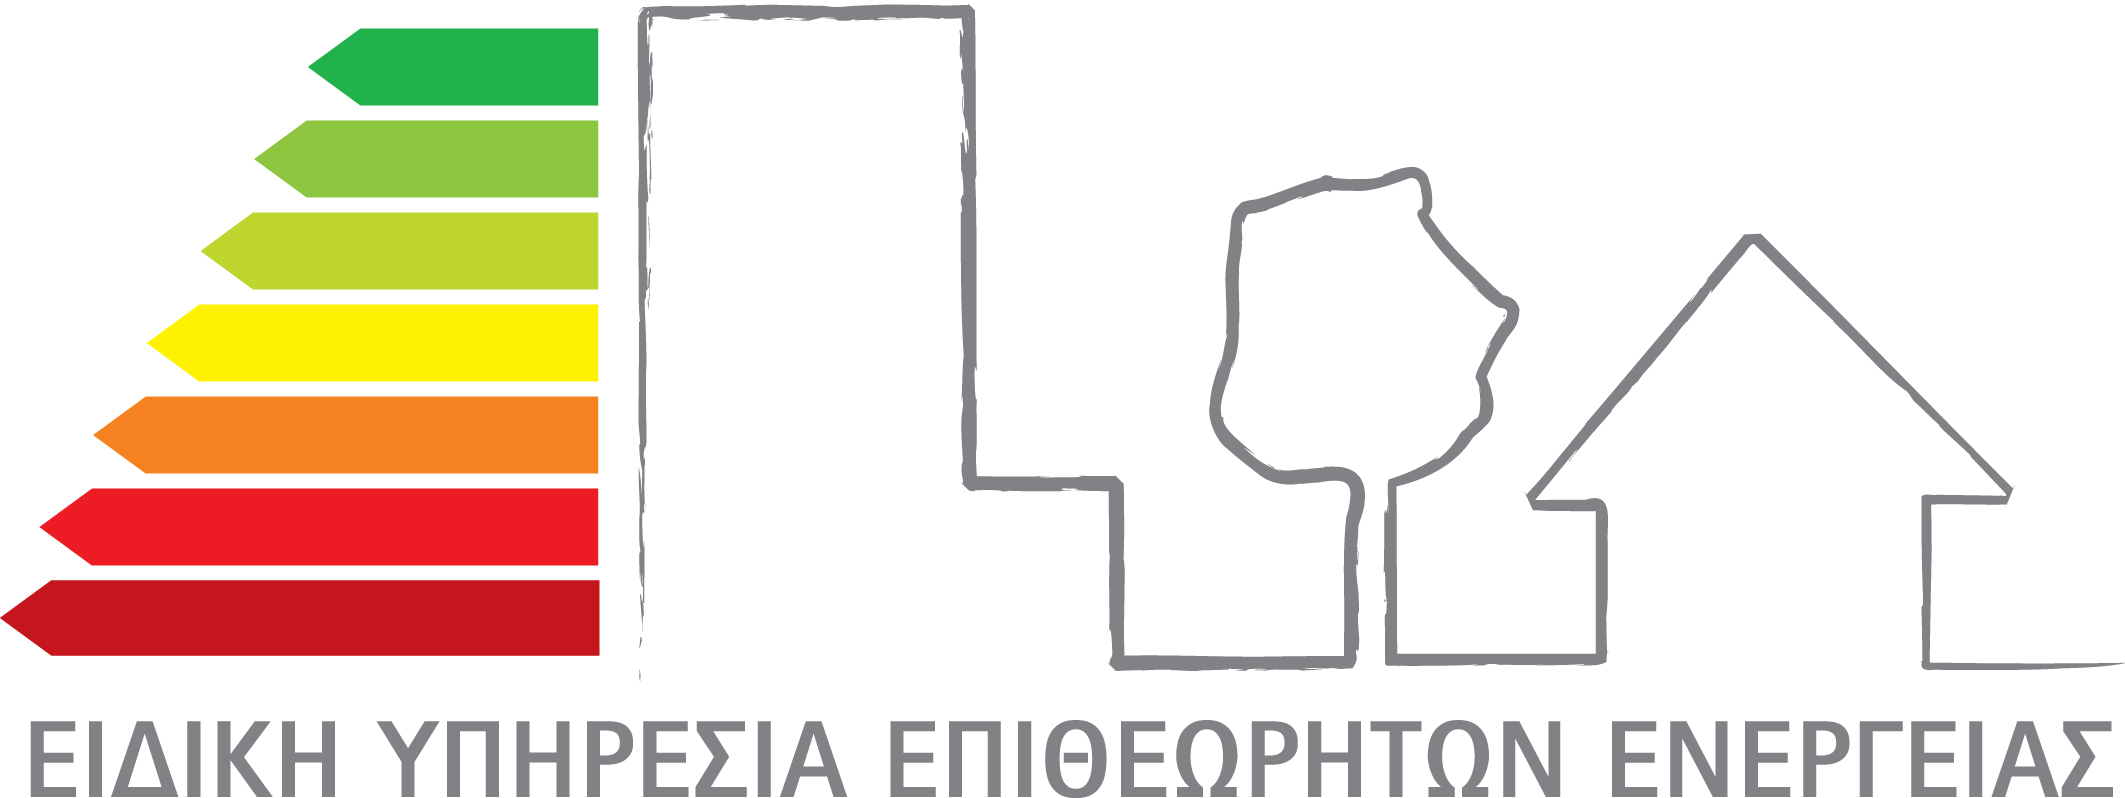 More information about "Ενεργειακοί επιθεωρητές & νέο ΕΣΠΑ"